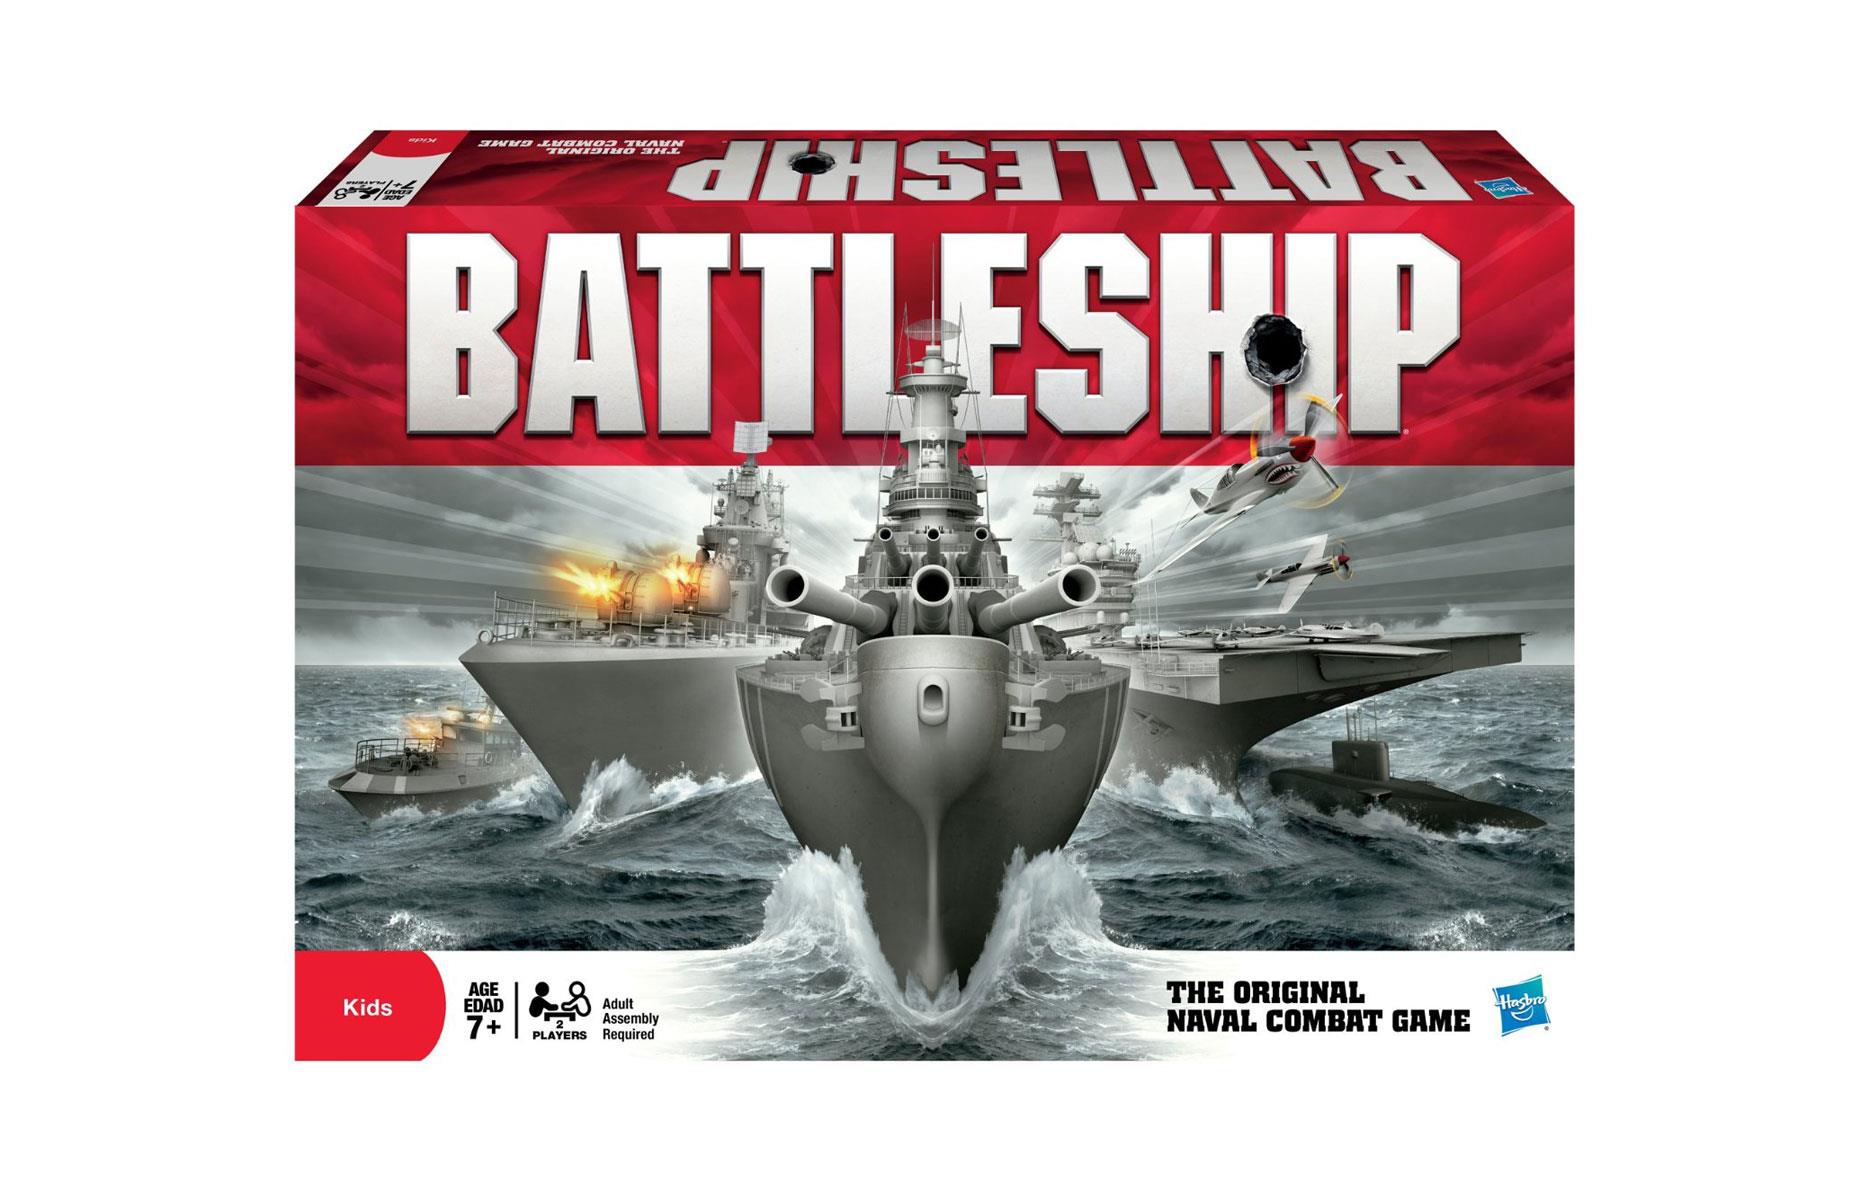 Battleship – you need to strategize to maximize 